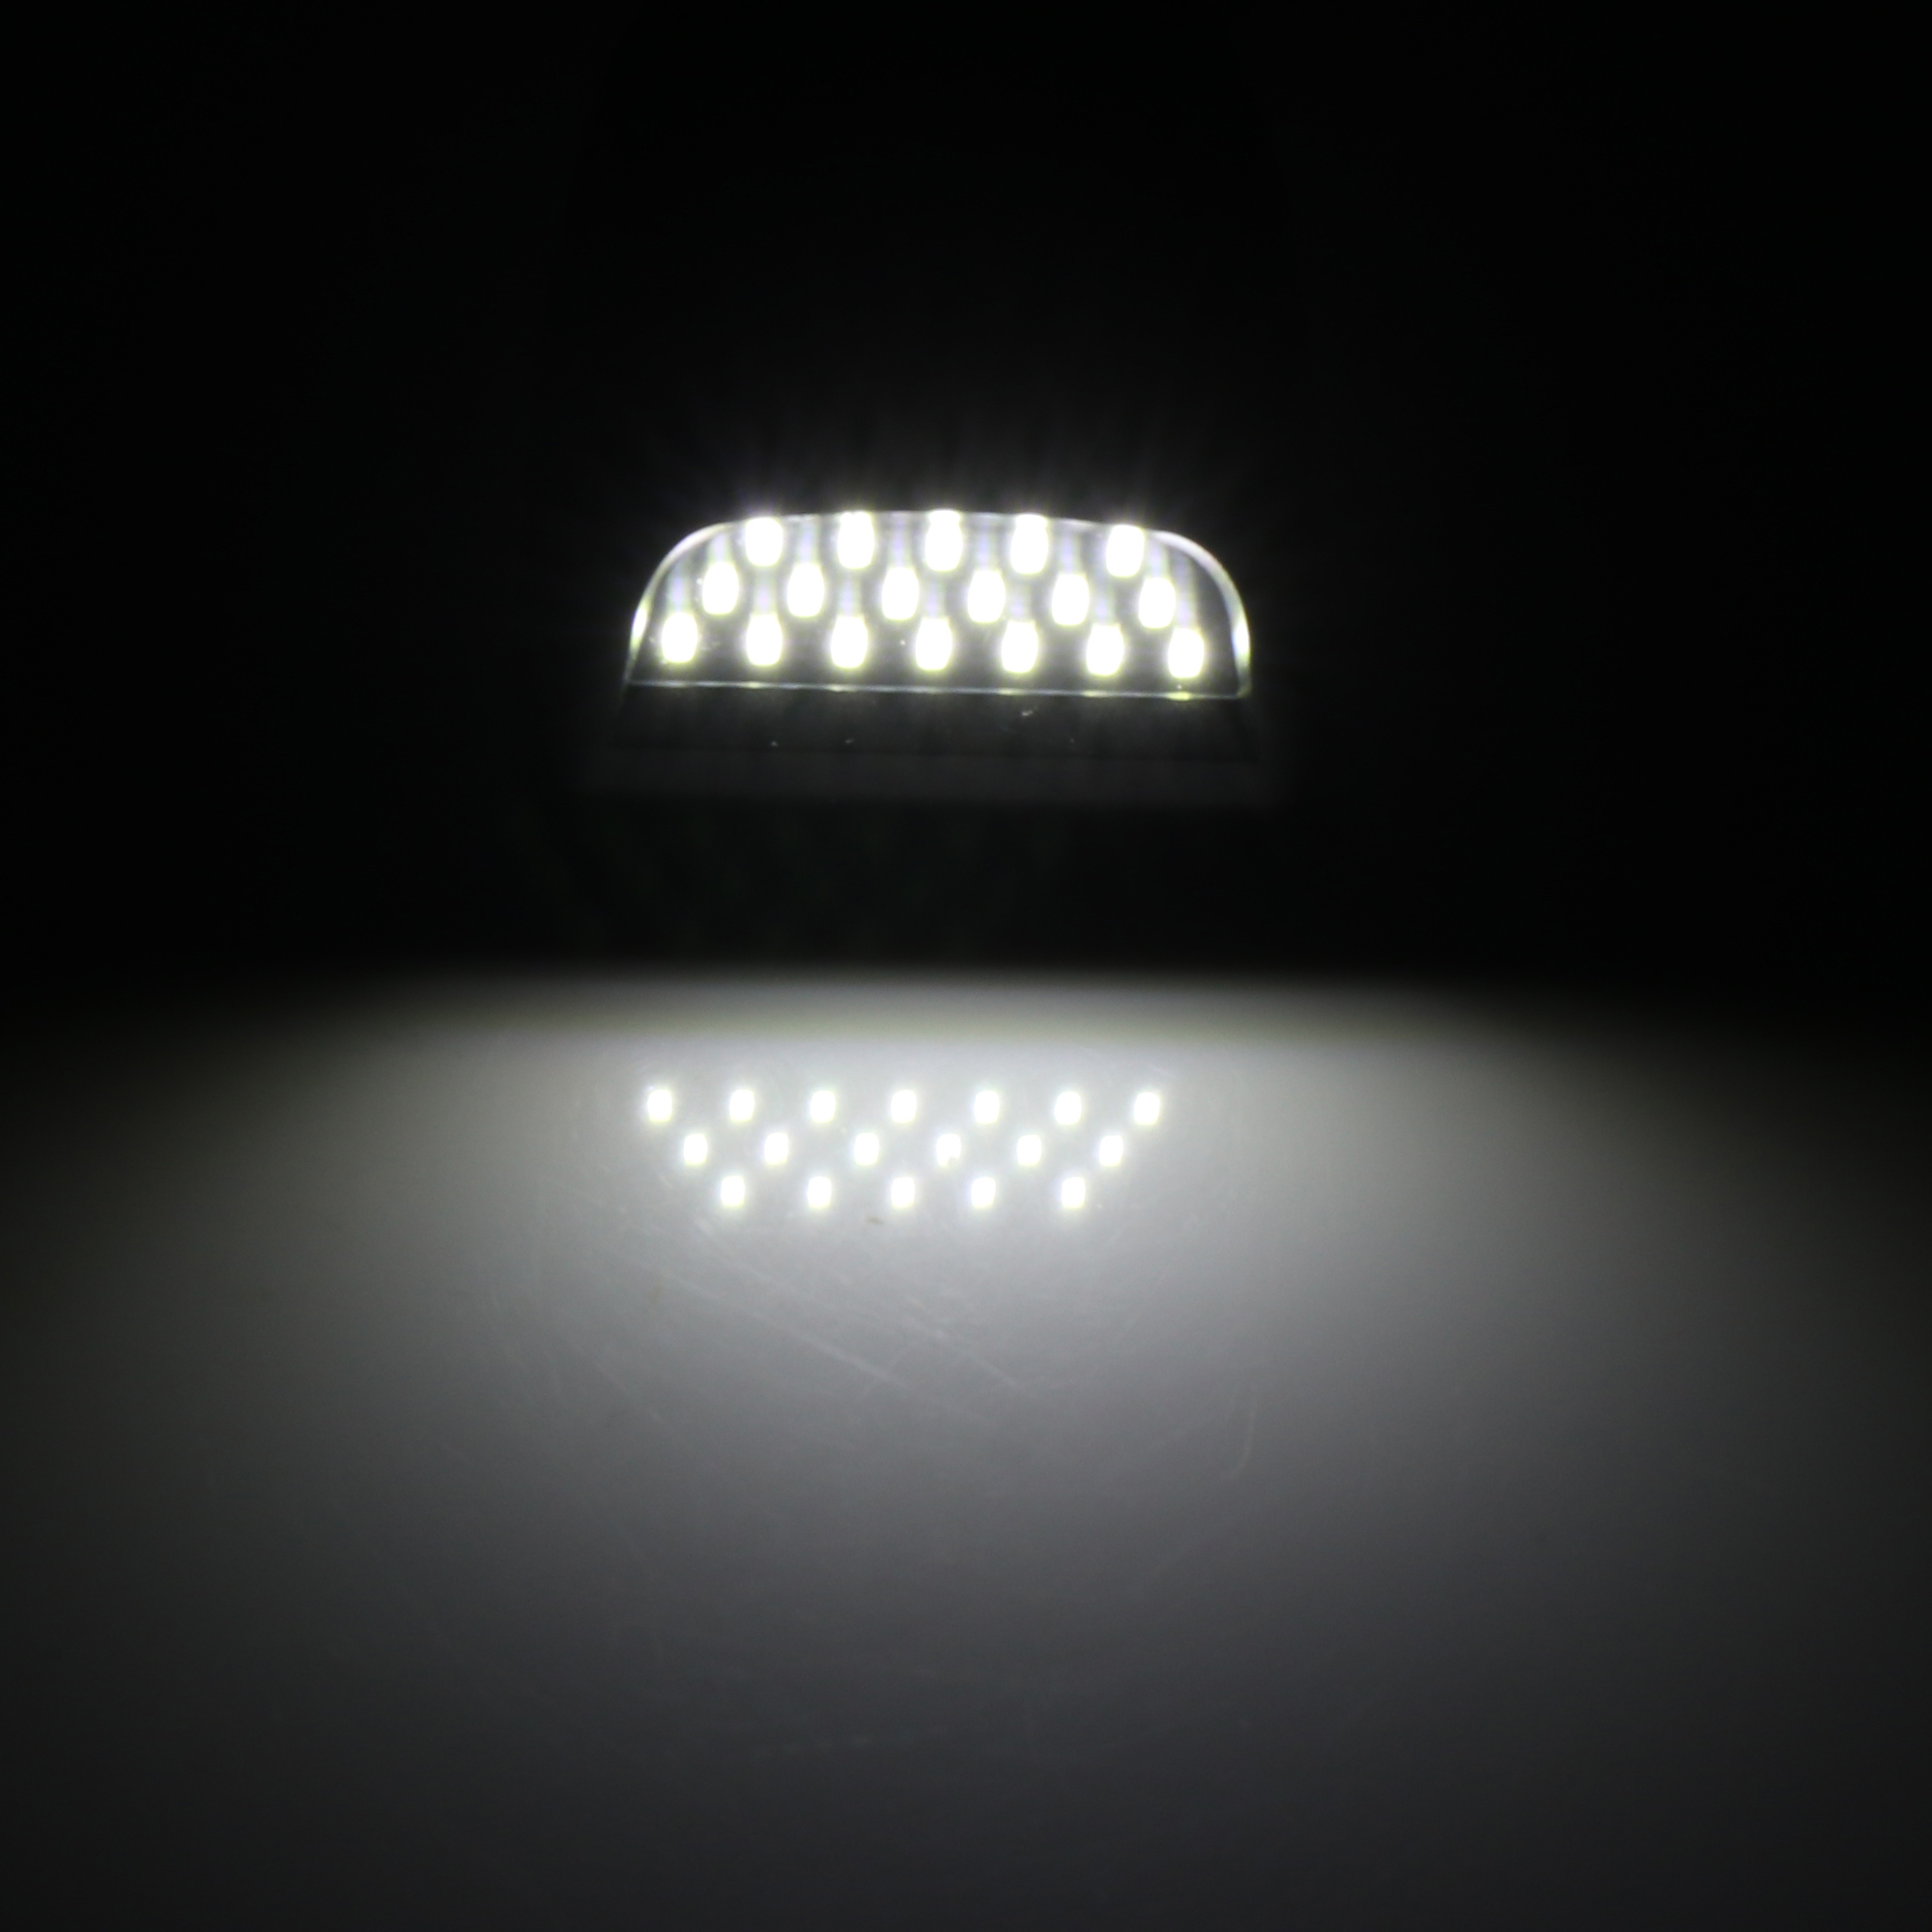 Unique Bargains Pair LED License Plate Light White Light for Cadillac Escalade EXT 2002-2013